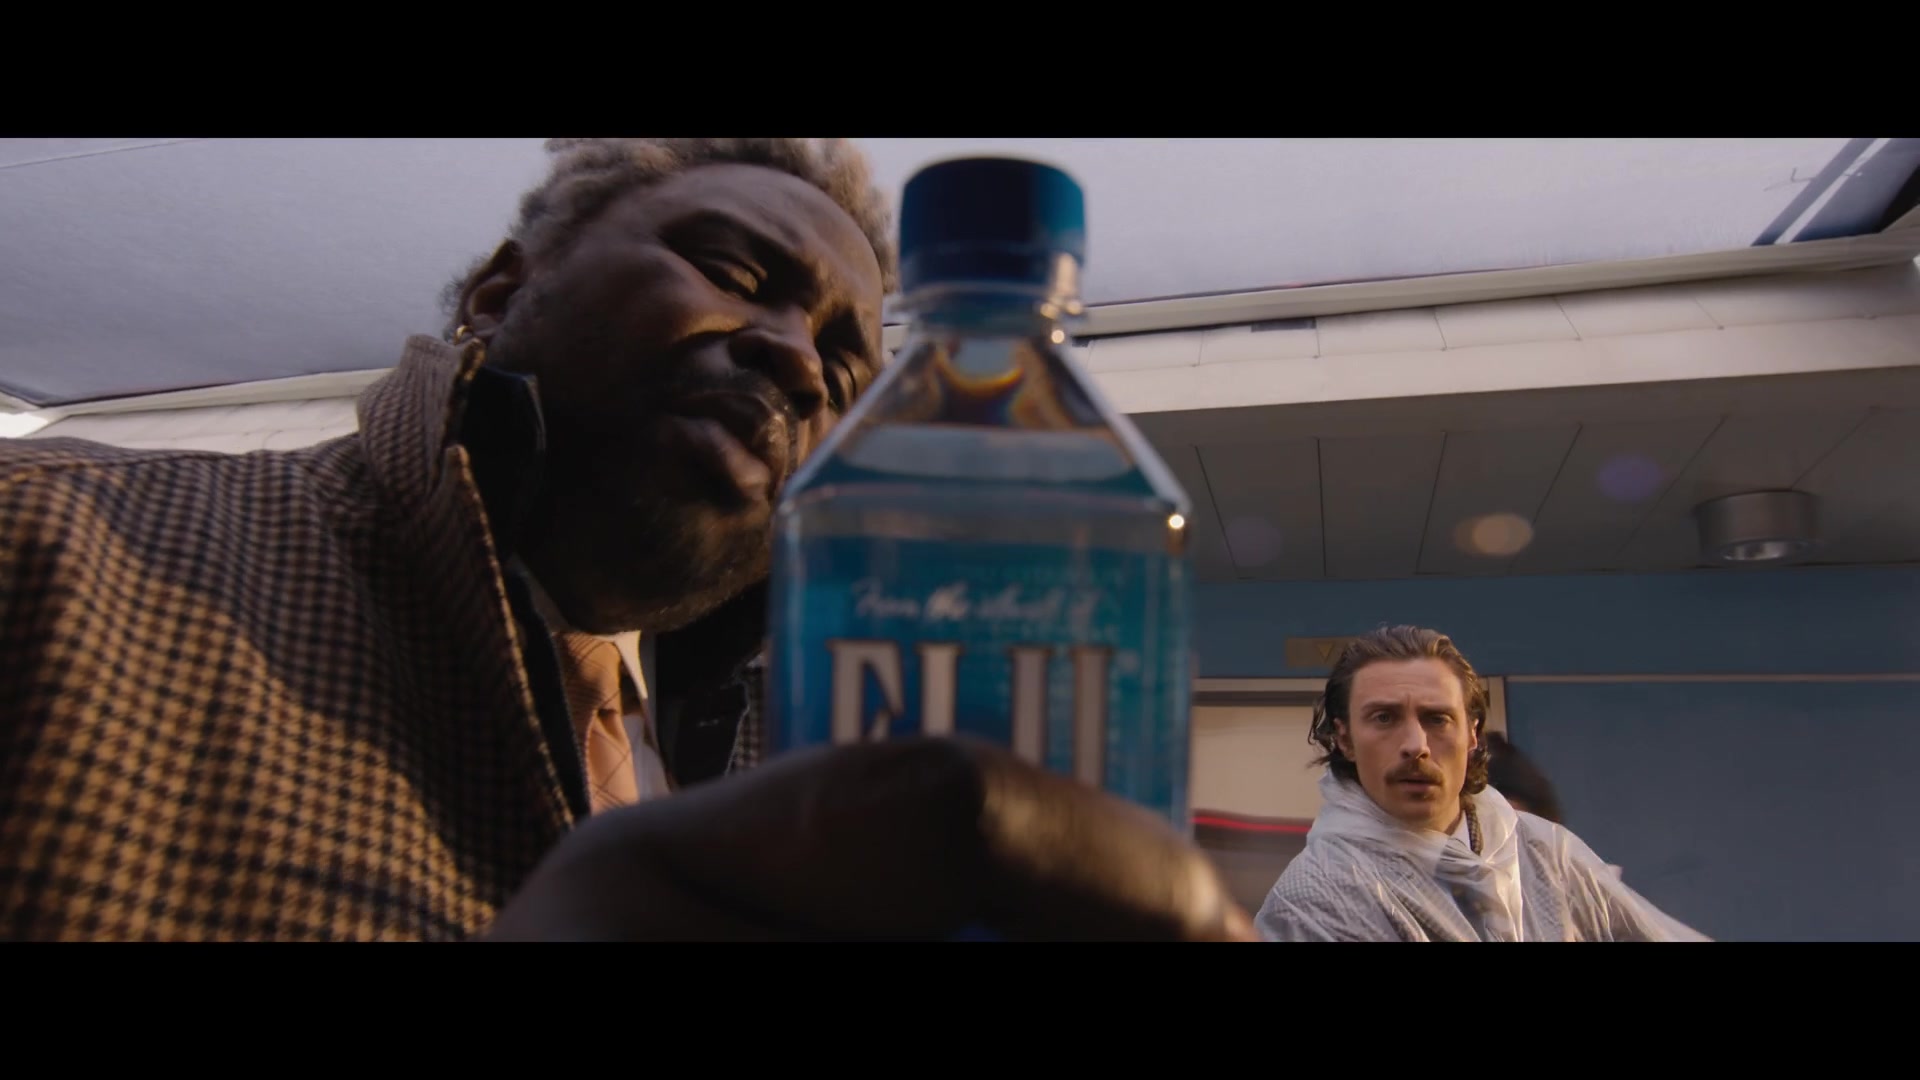 The breakout star of 'Bullet Train' is… a water bottle?